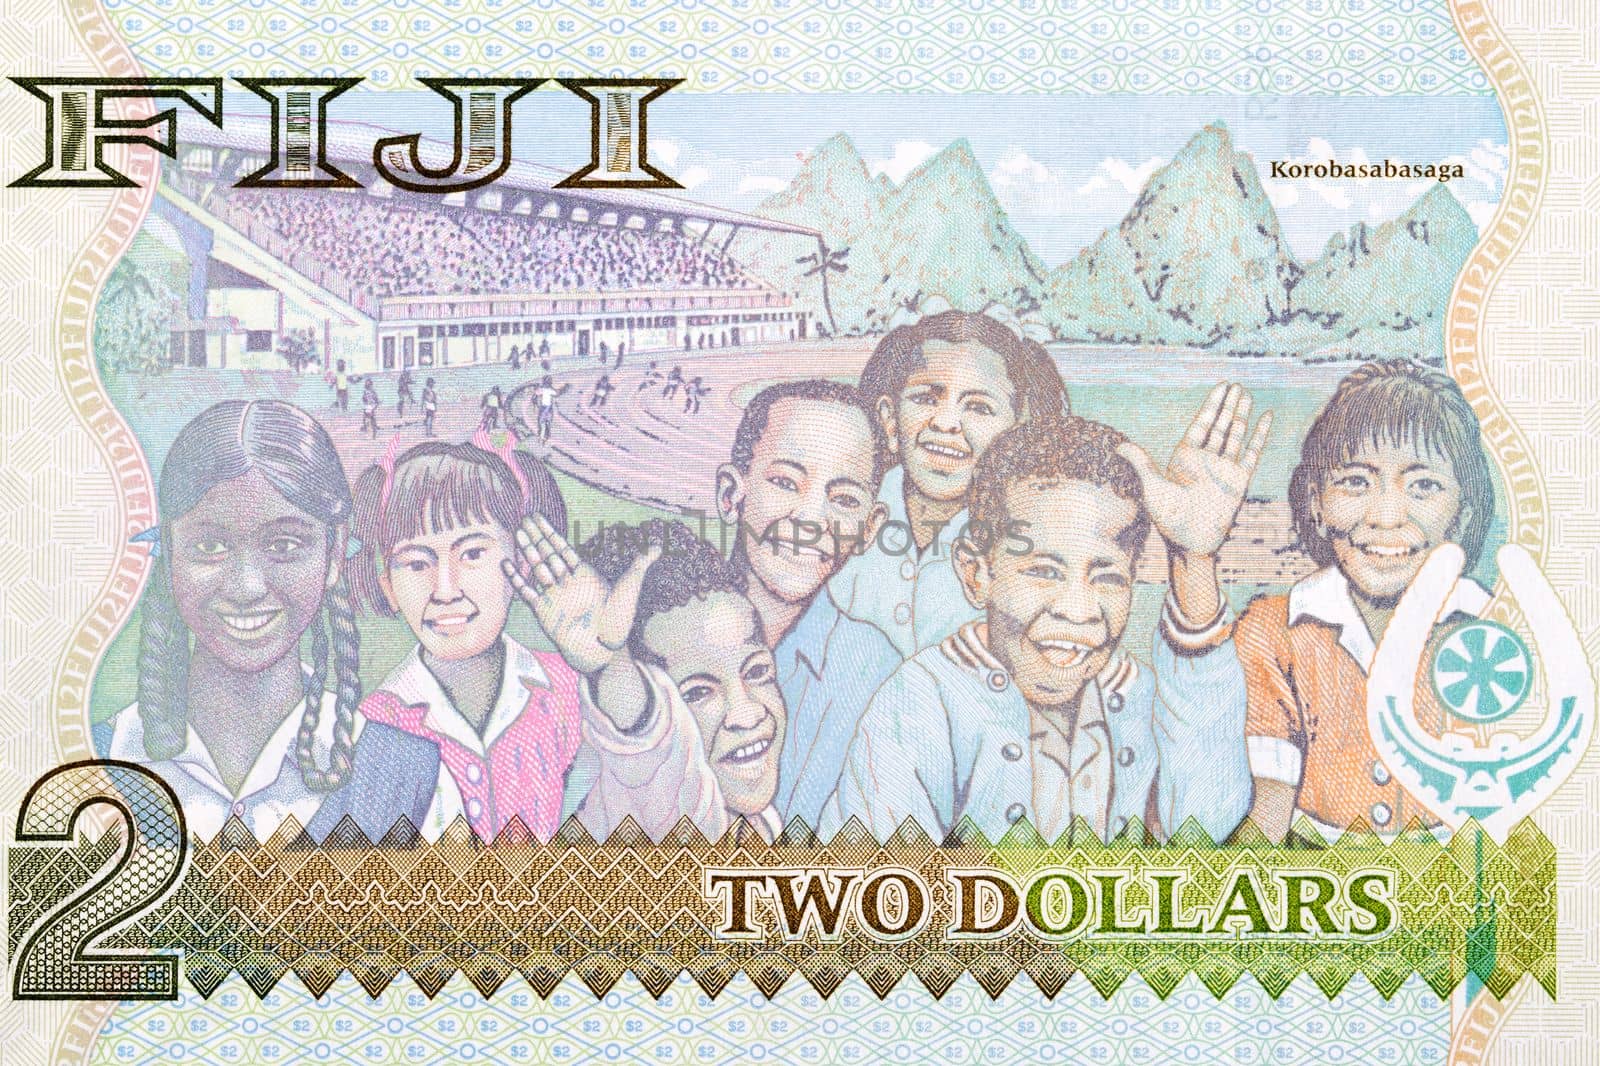 School children and Mt Uluinabukulevu mountain from money by johan10